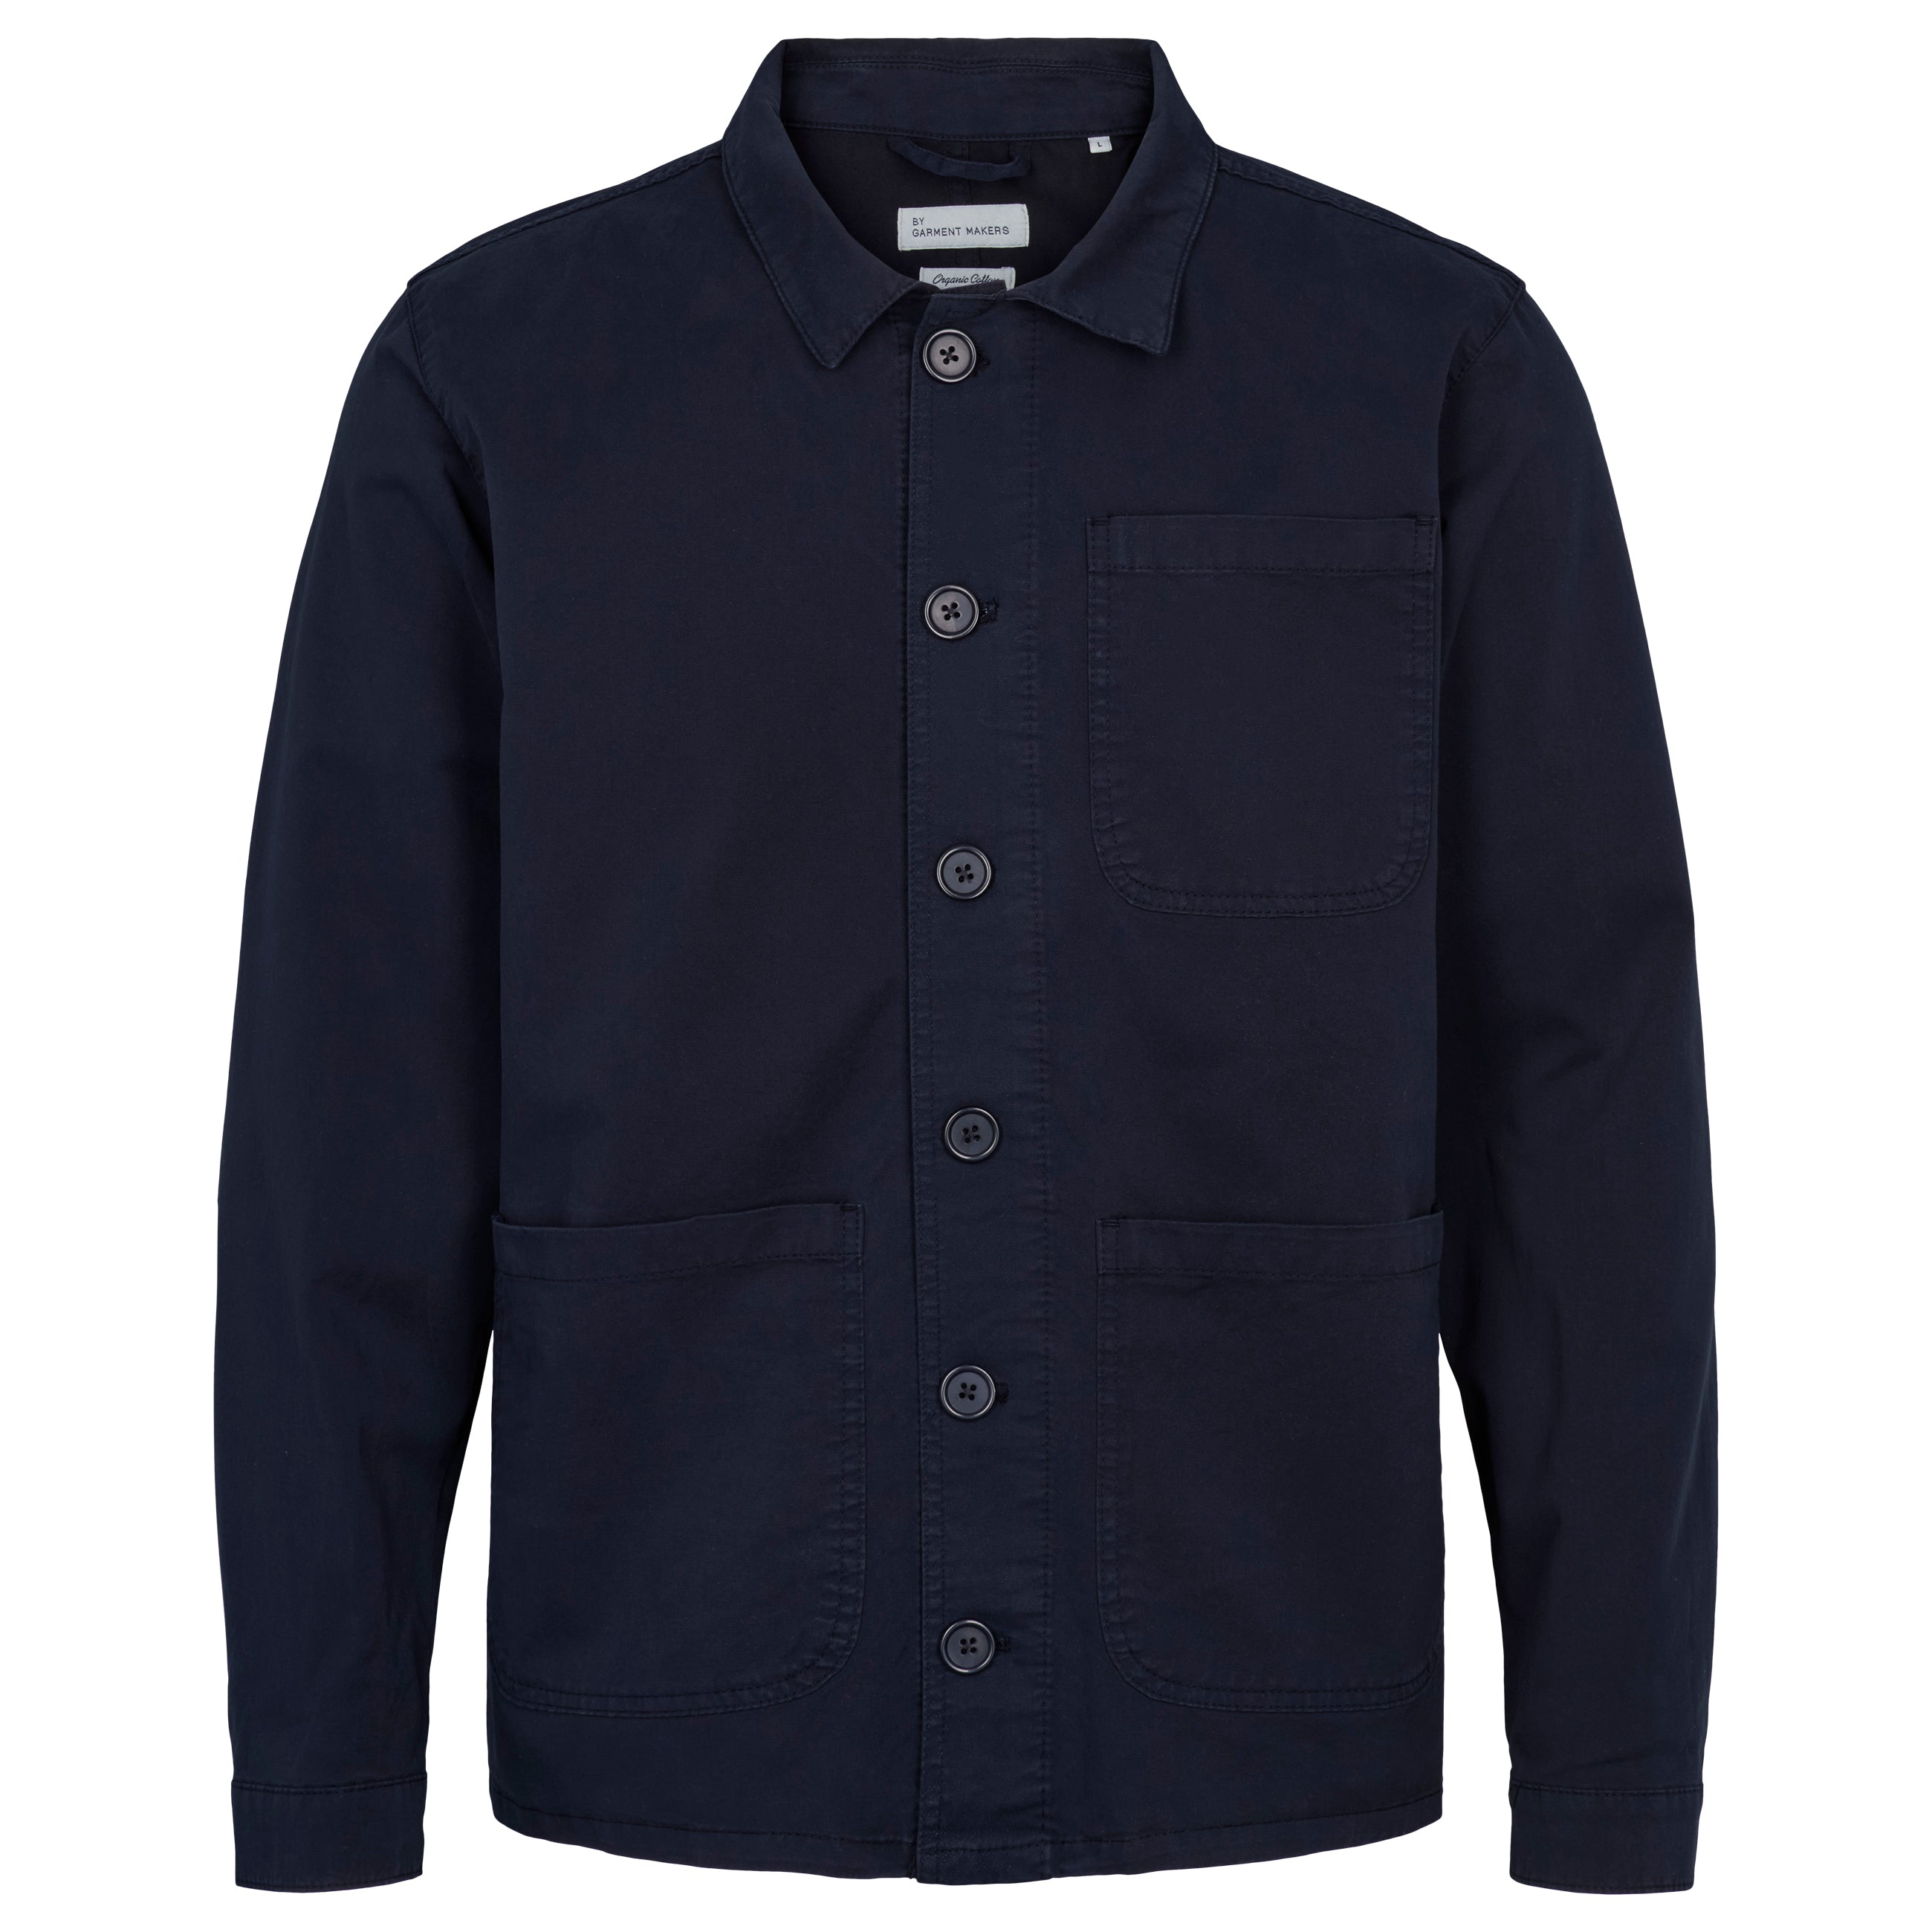 By Garment Makers The Organic Workwear Jacket GOTS jakke 3096 Navy Blazer